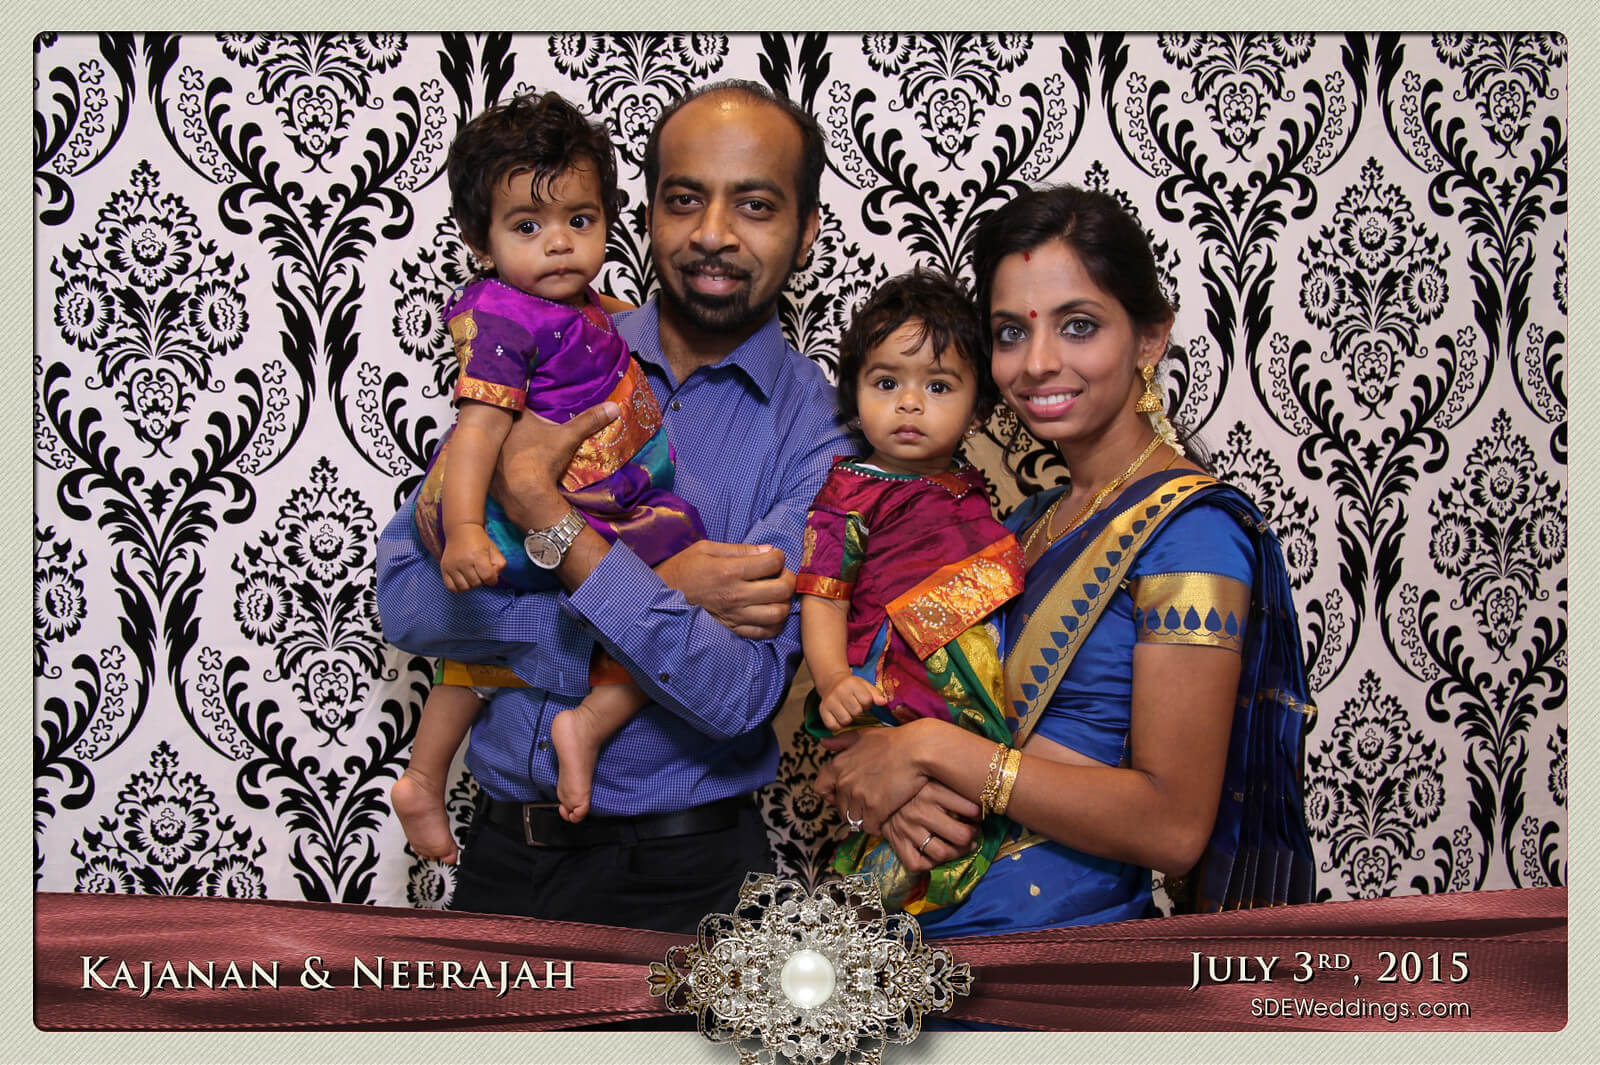 Toronto Scarborough Convention Centre Hindu Wedding Photo Booth Rental 10